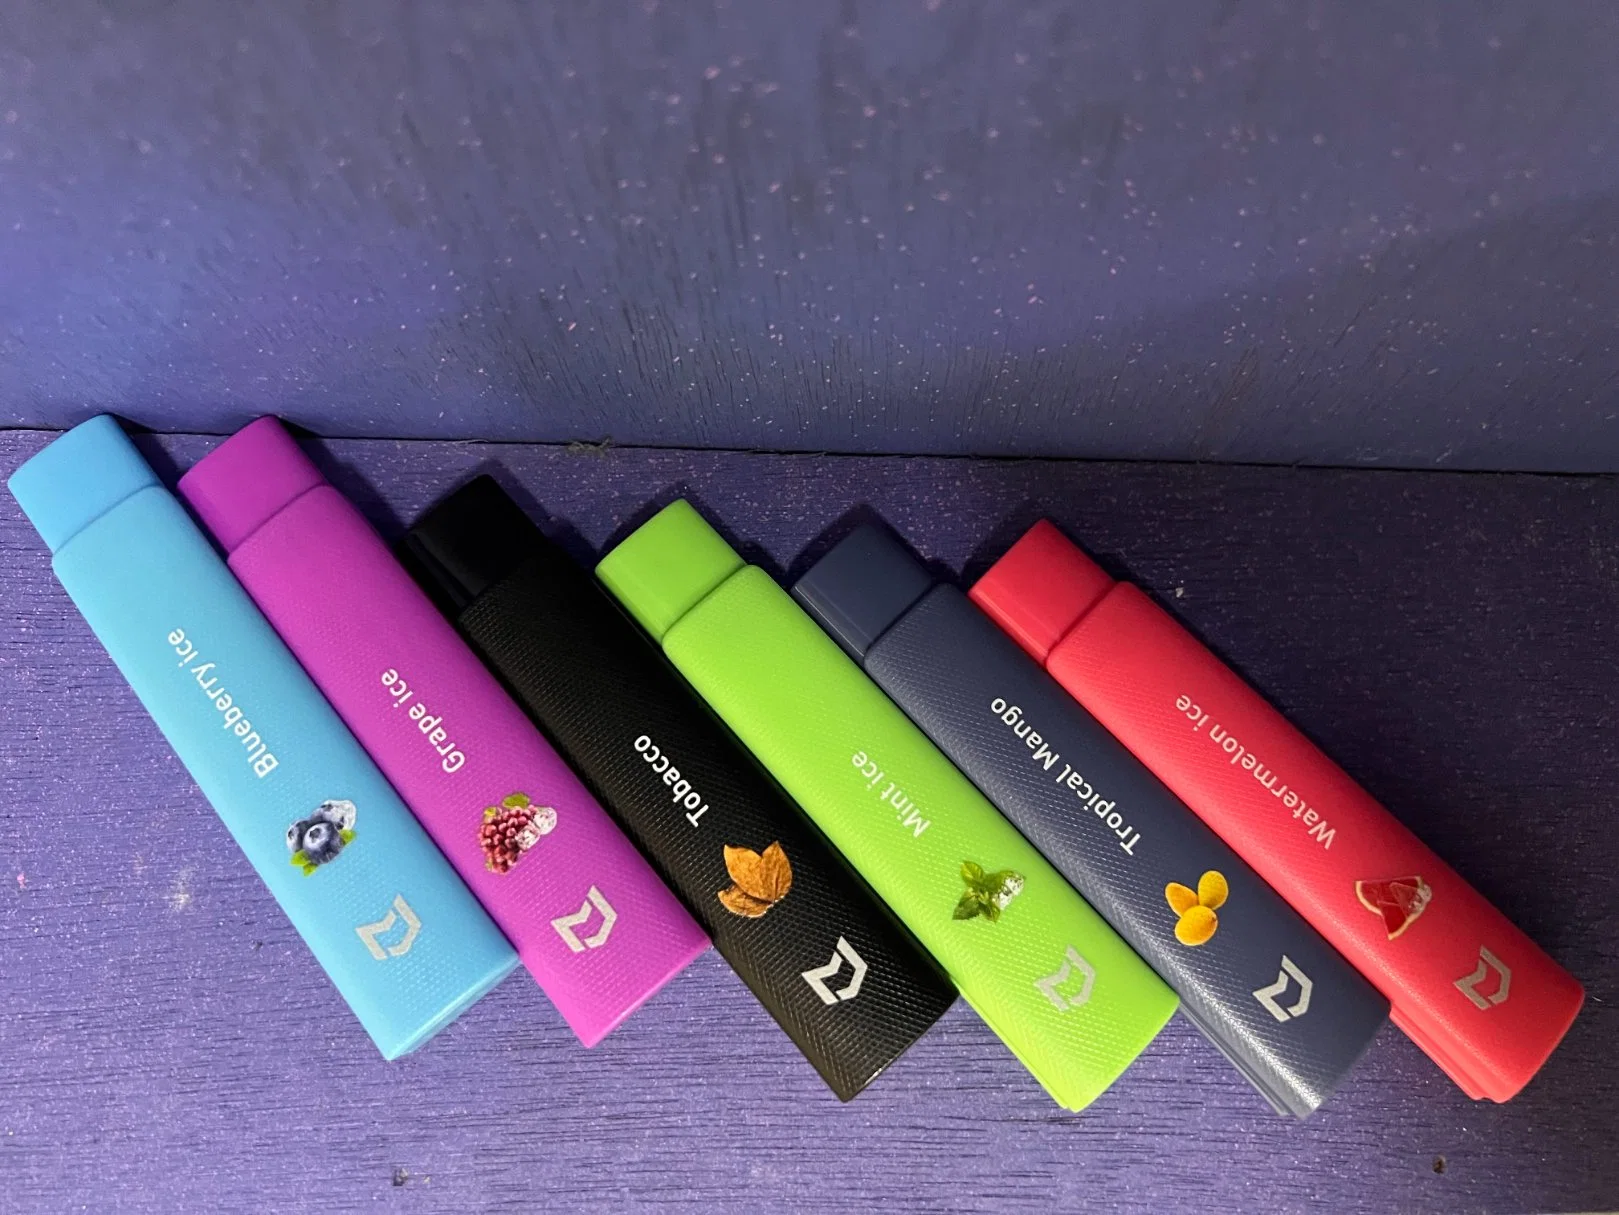 Jomo L6 Mini Puffs Disposable/Chargeable Fruit Flavors Vape Pen 600puffs Electronic-Cigarette with Tpd